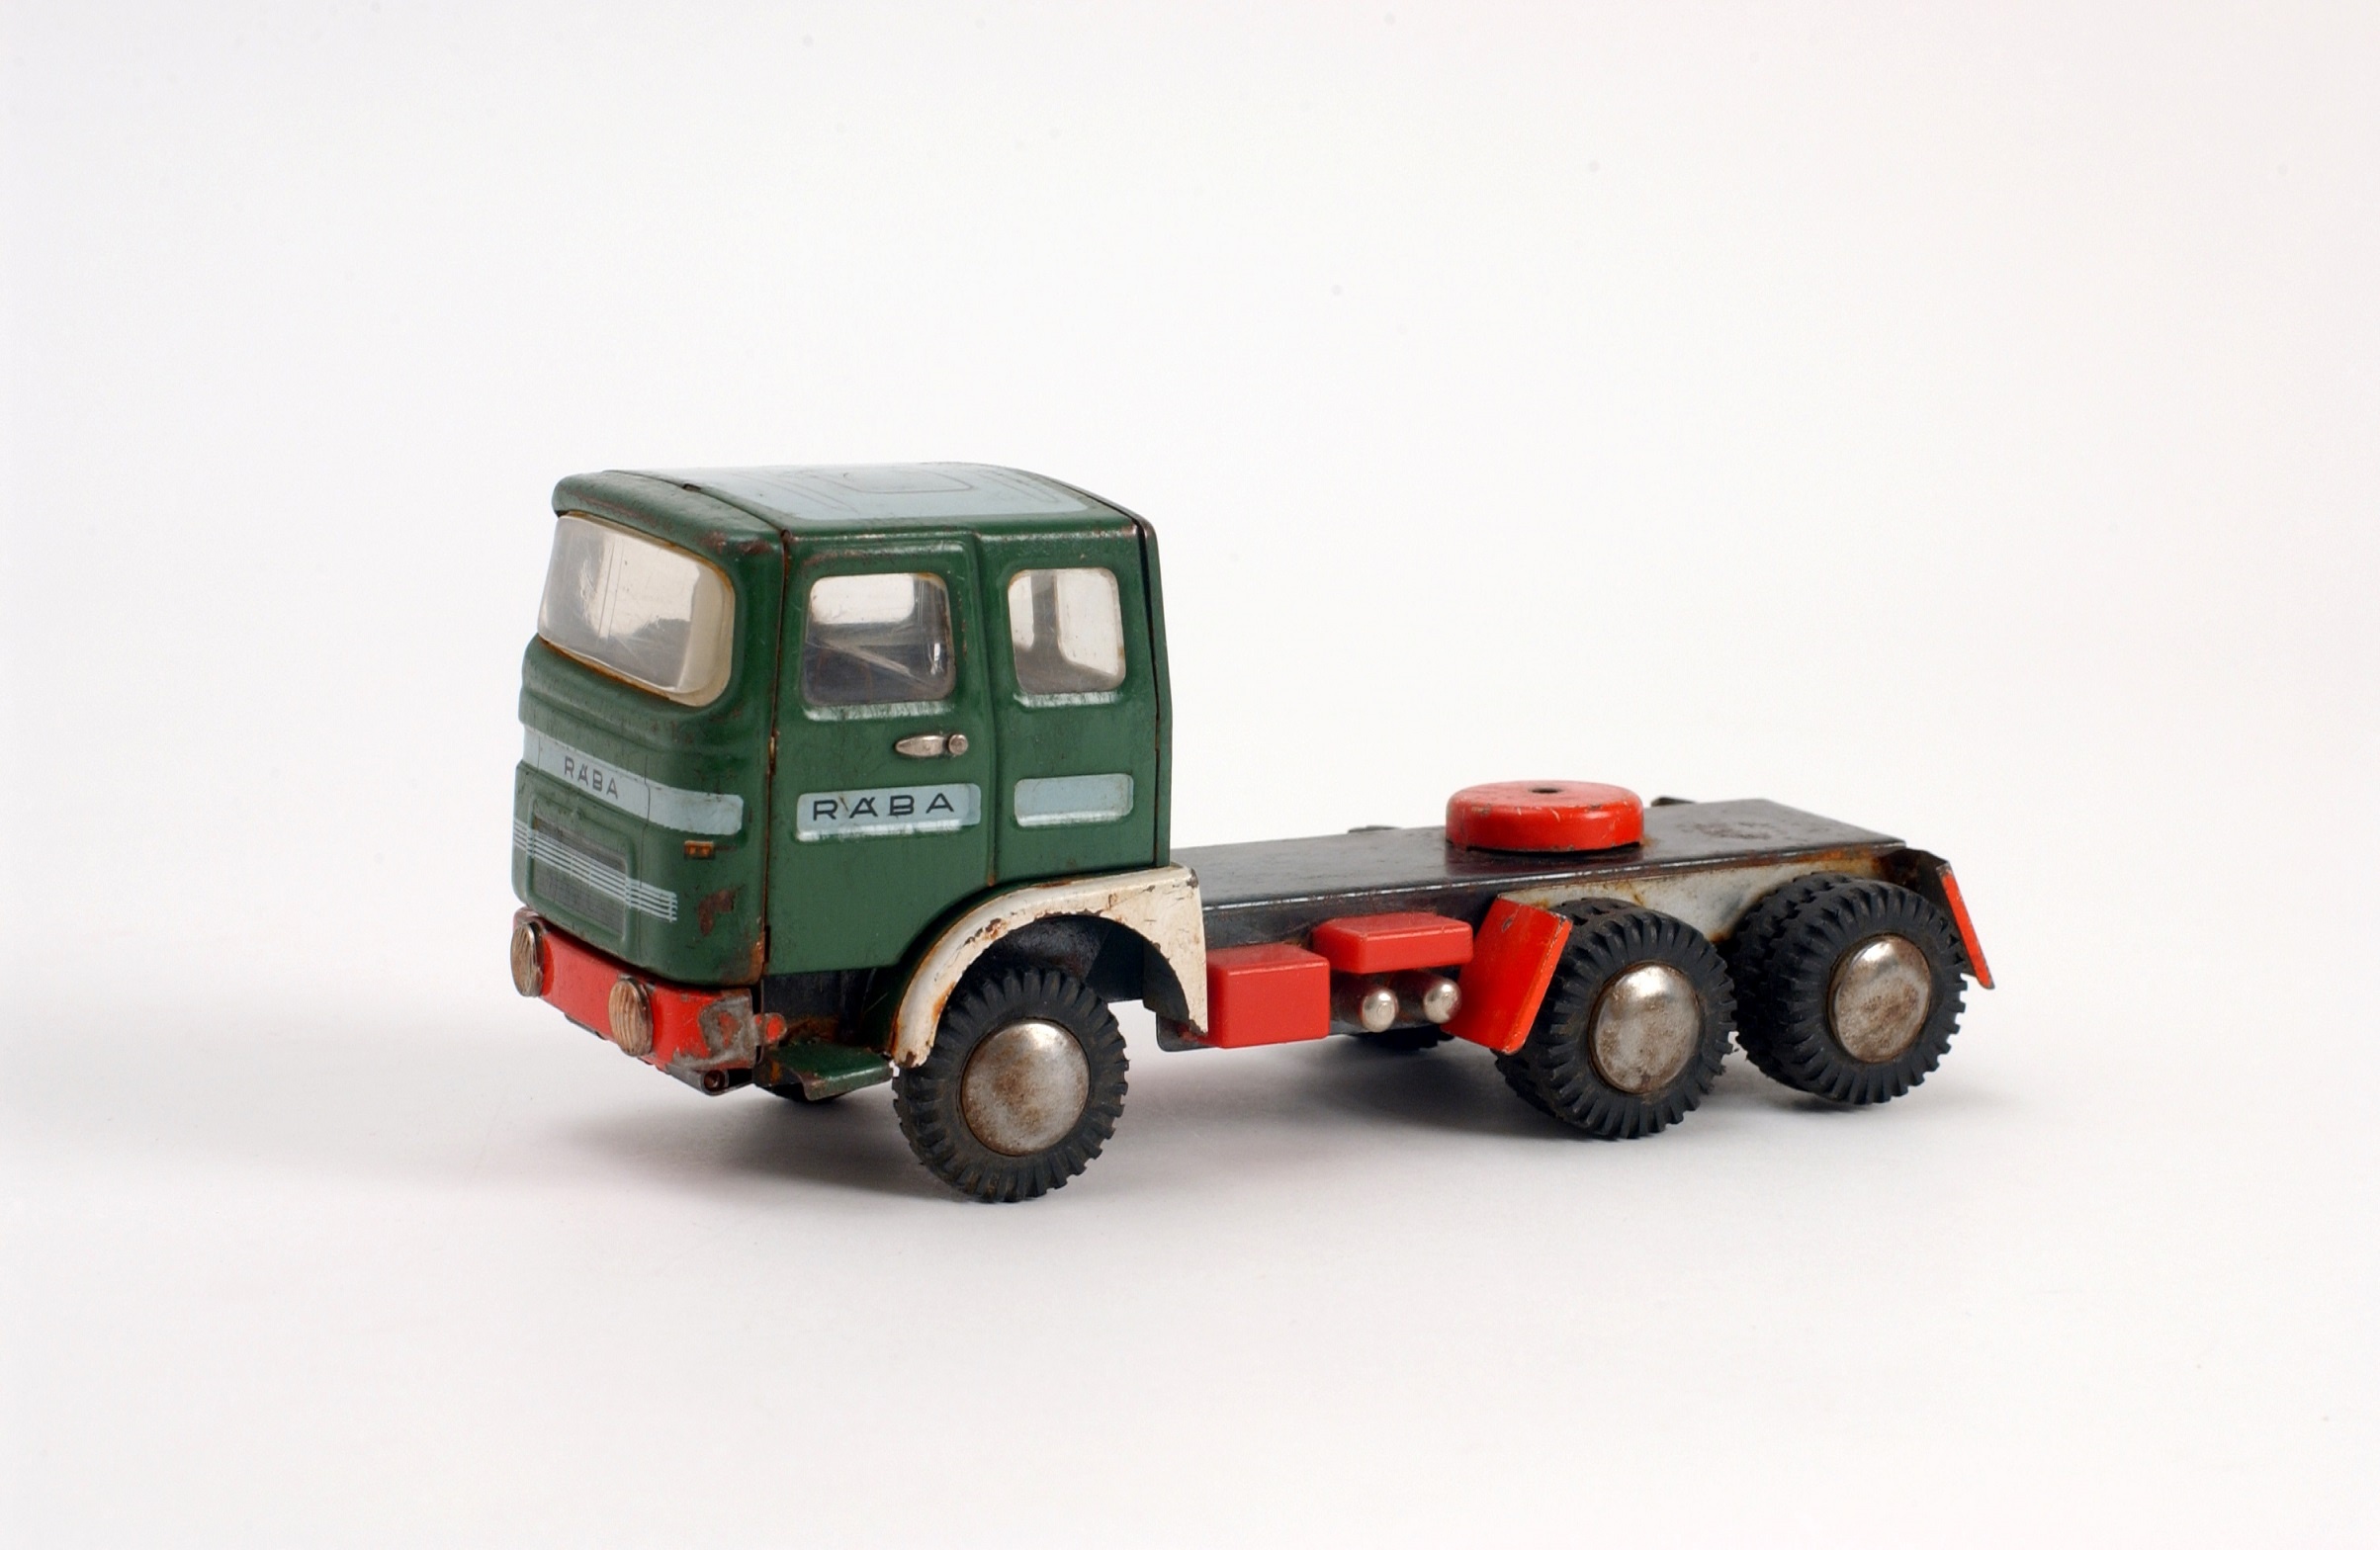 Játékautó, Rába teherautó (Óbudai Múzeum CC BY-NC-SA)